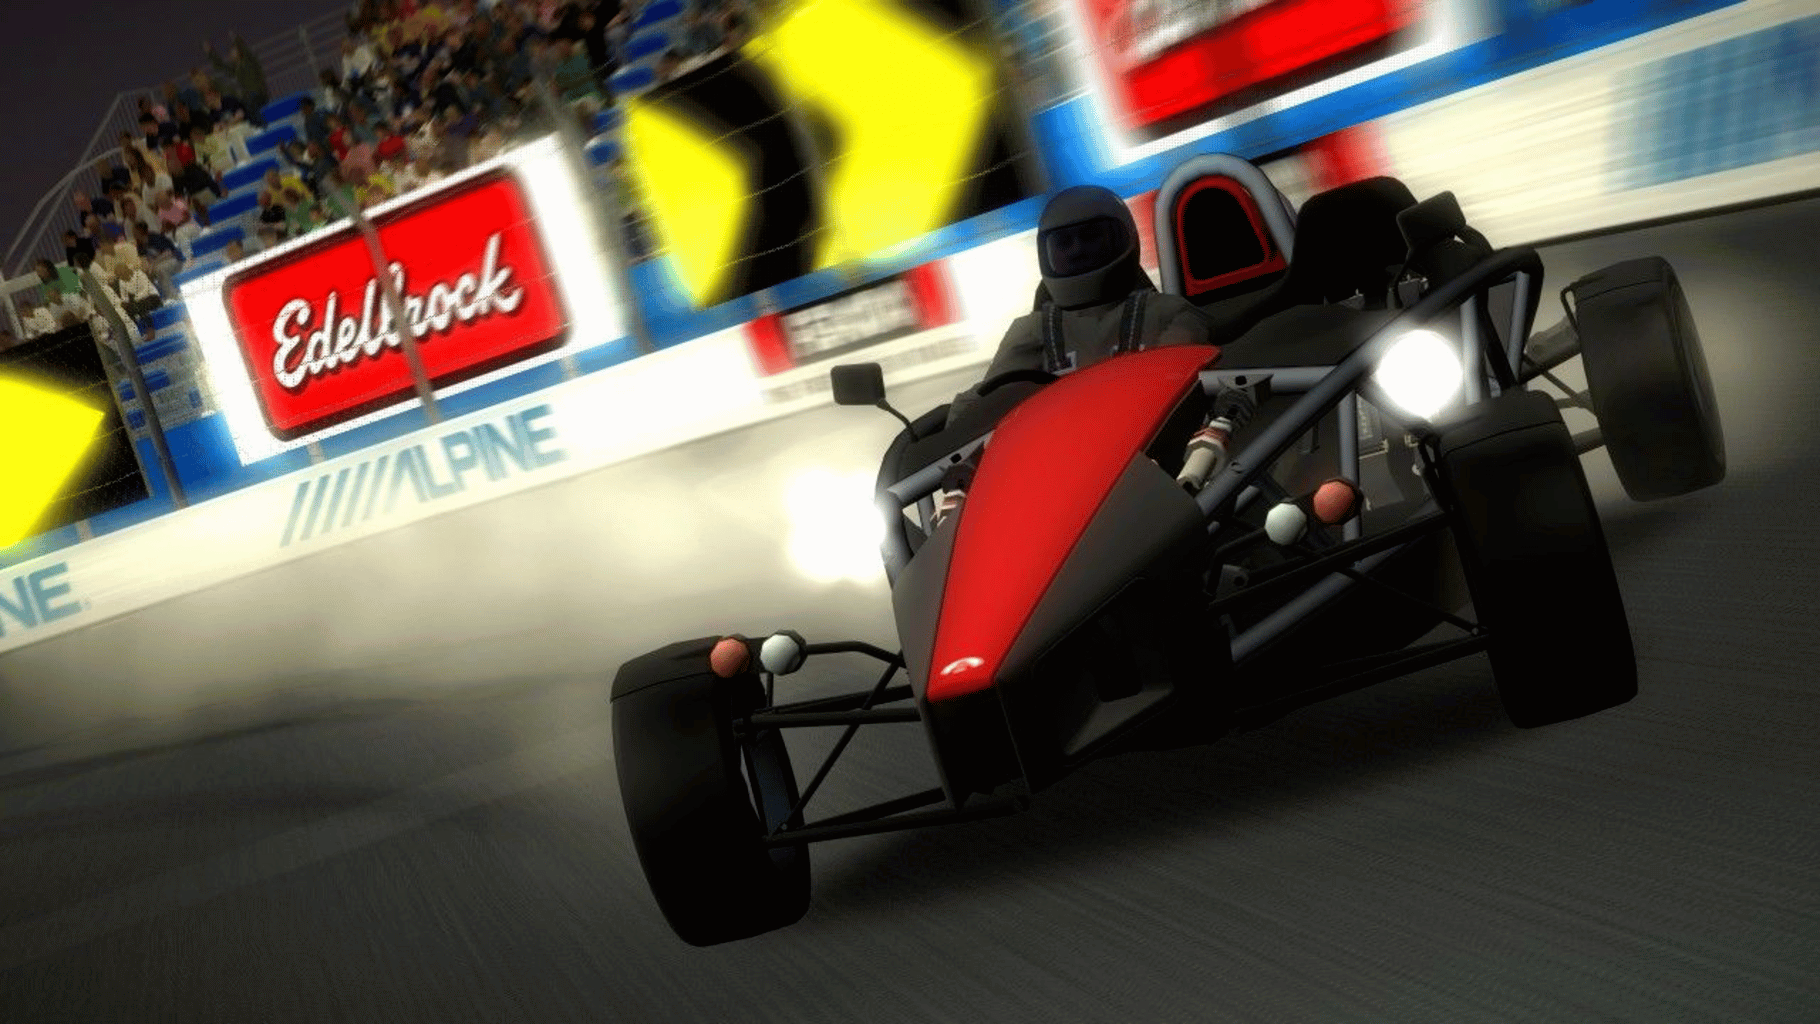 Project Gotham Racing 3 screenshot